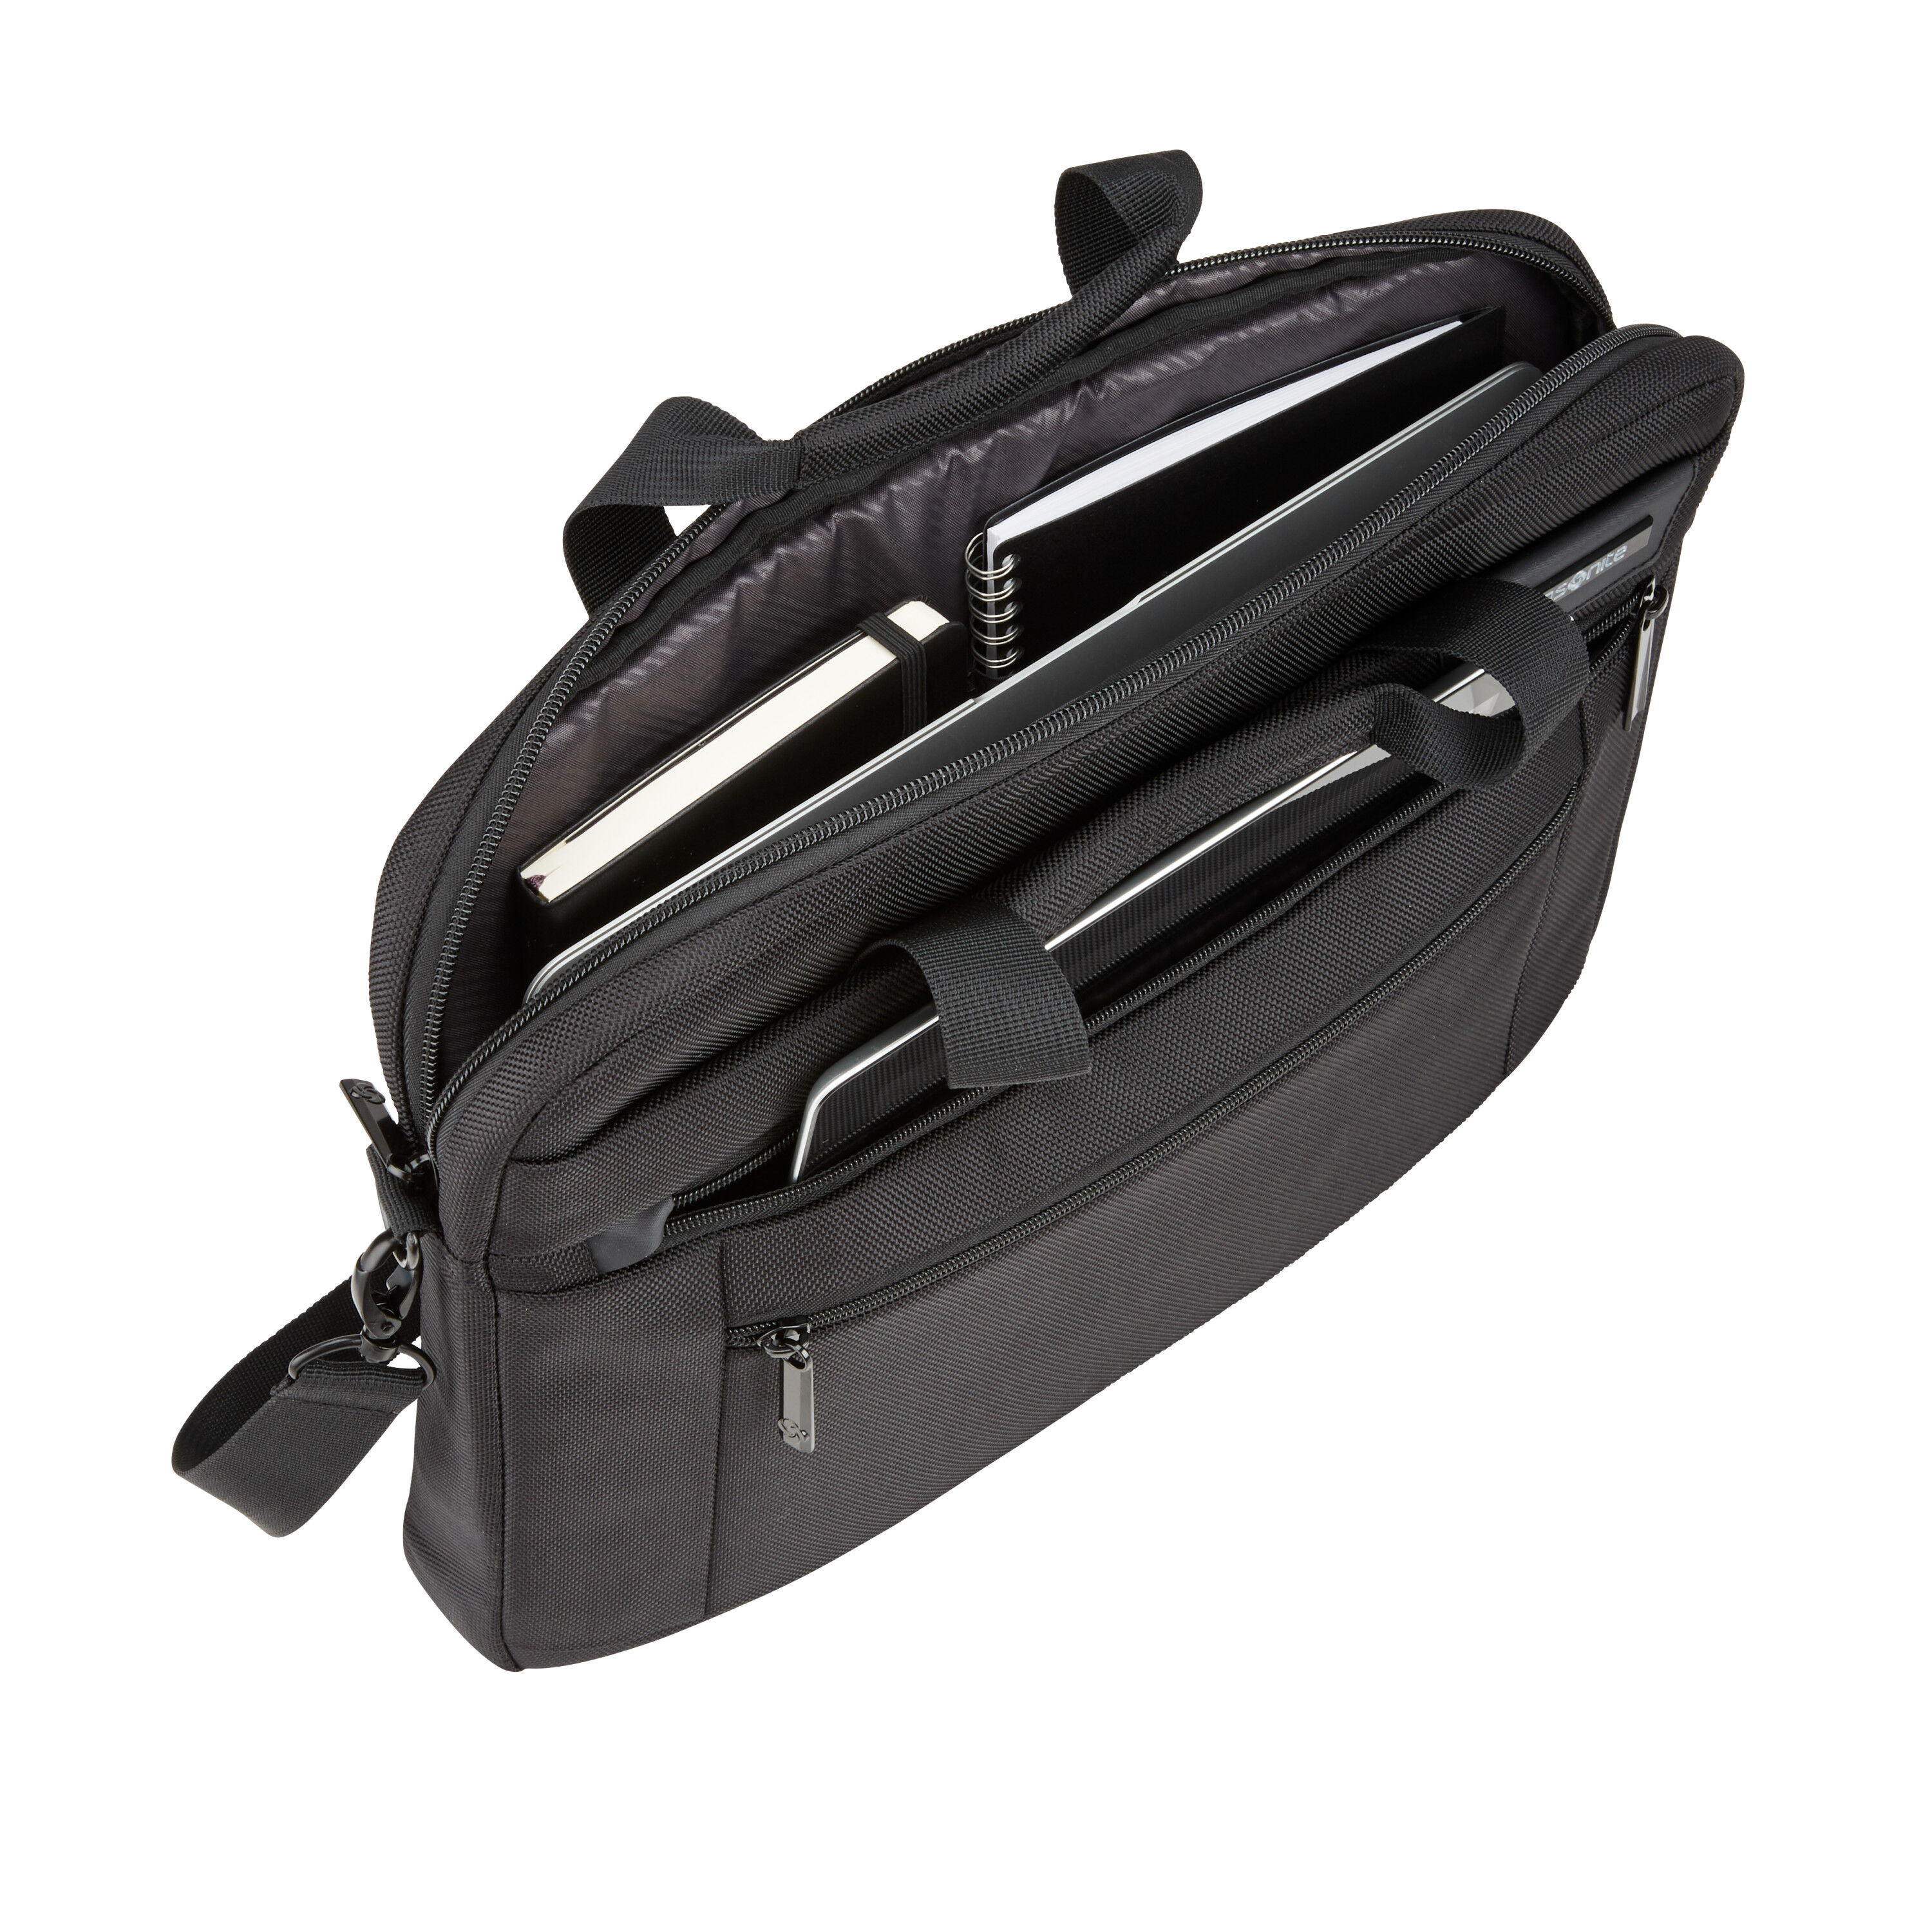 Samsonite  Bags  7 Inch Orginal Samsonite Black Laptop Bag With Multiple  Pockets And Cushioning  Poshmark